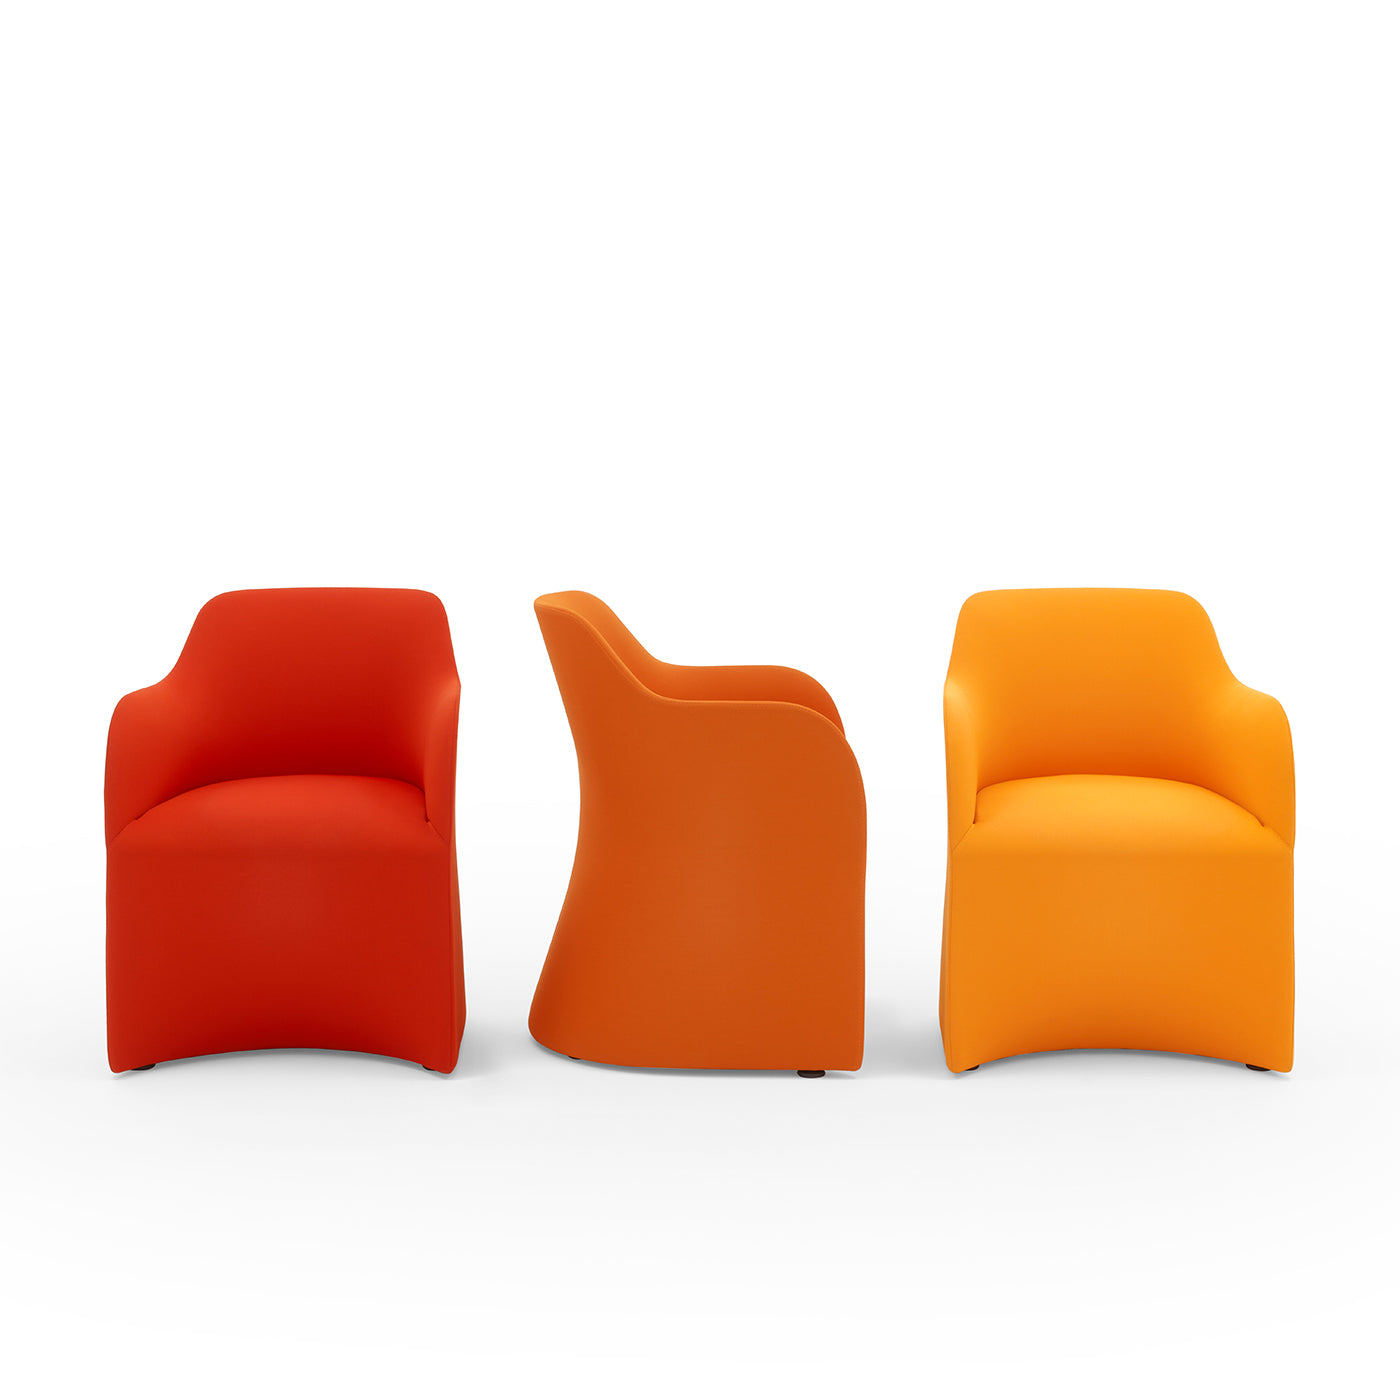 Maggy Big Orange Armchair by Basaglia + Rota Nodari - Alternative view 3